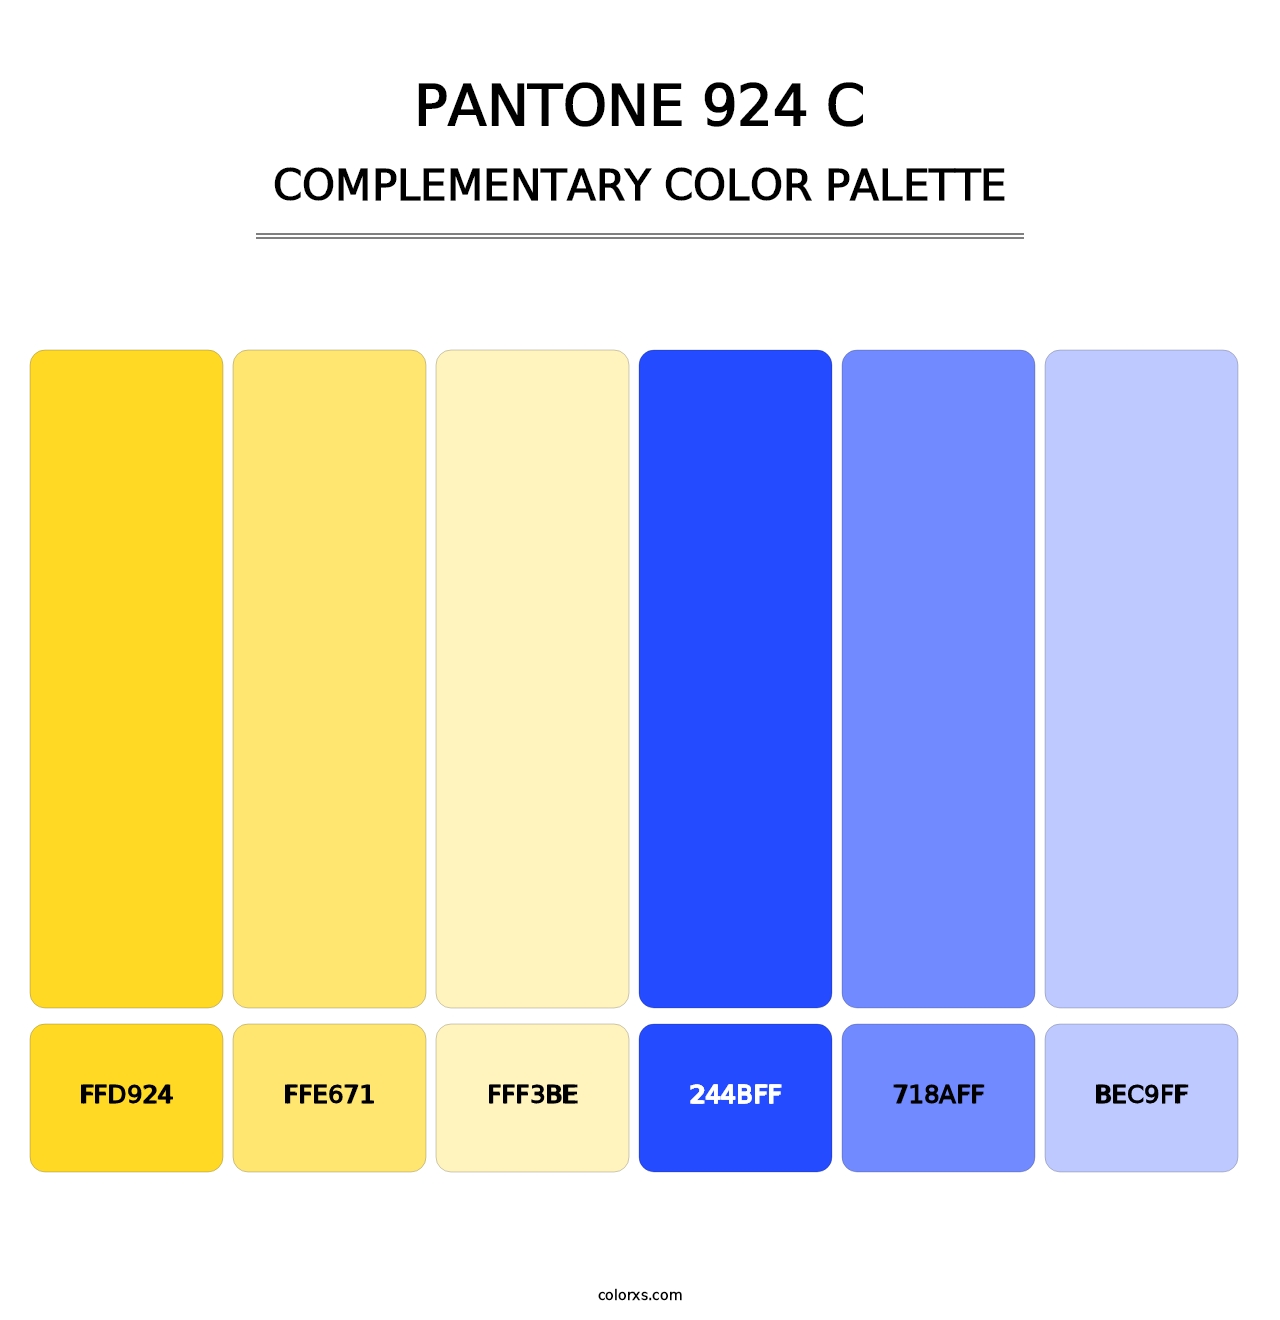 PANTONE 924 C - Complementary Color Palette